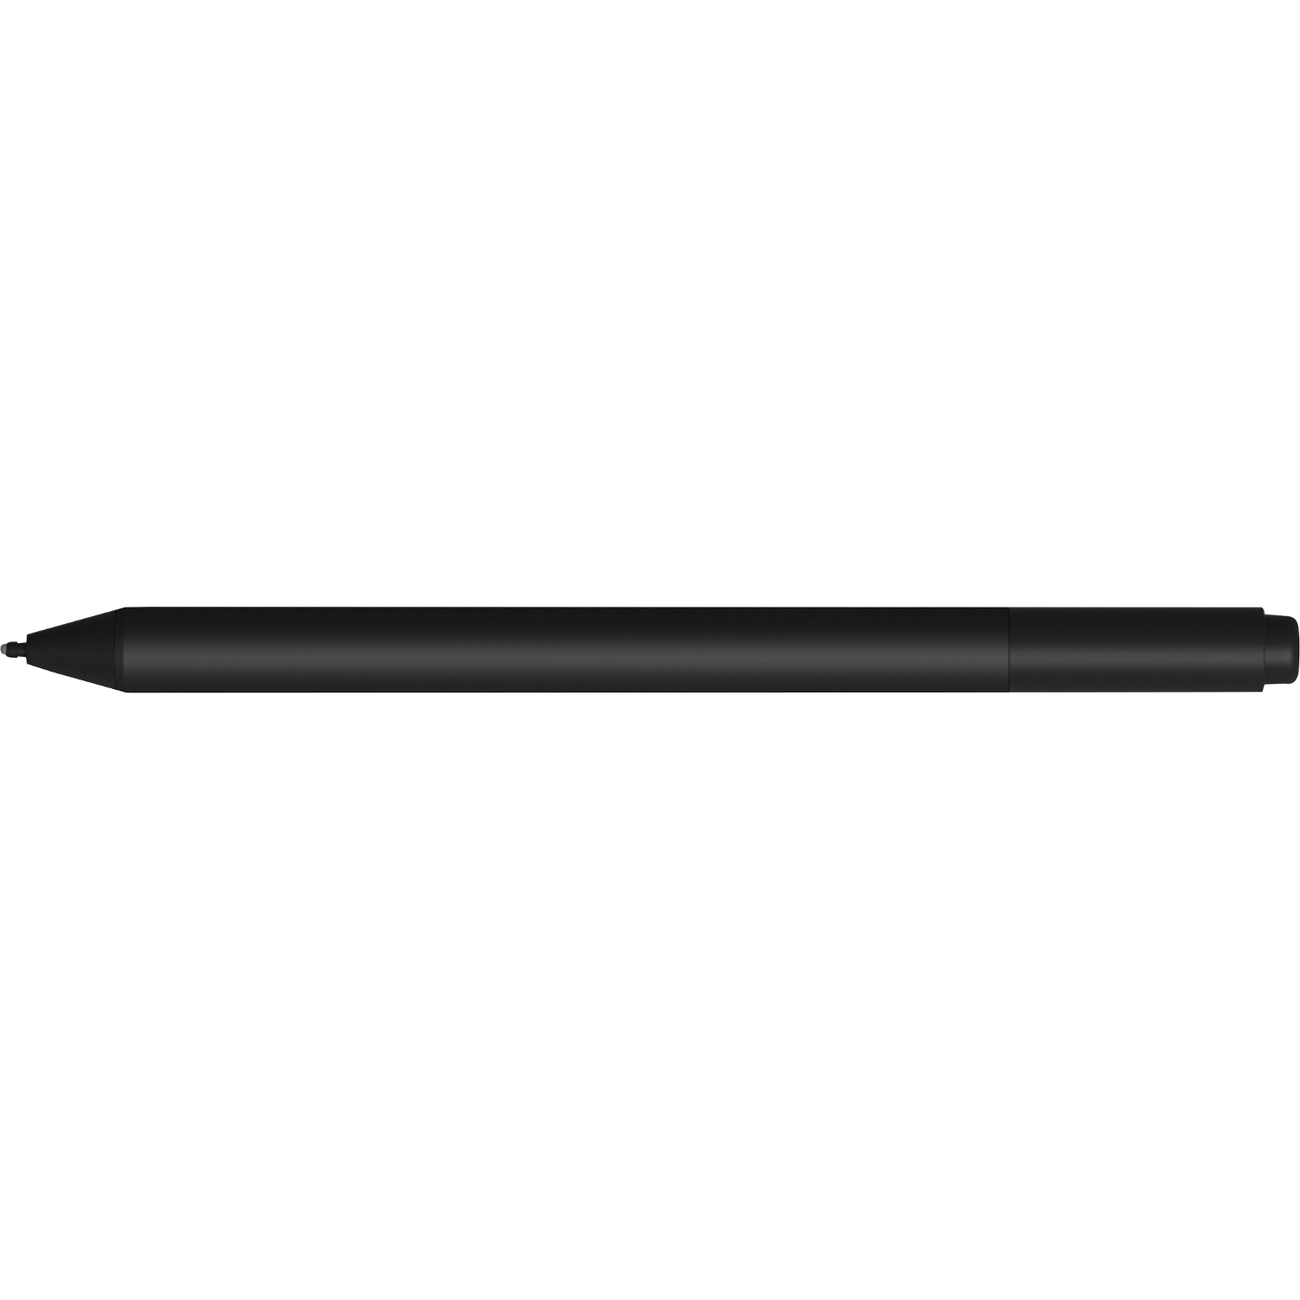 Microsoft Surface Pro Pen Black Product Image